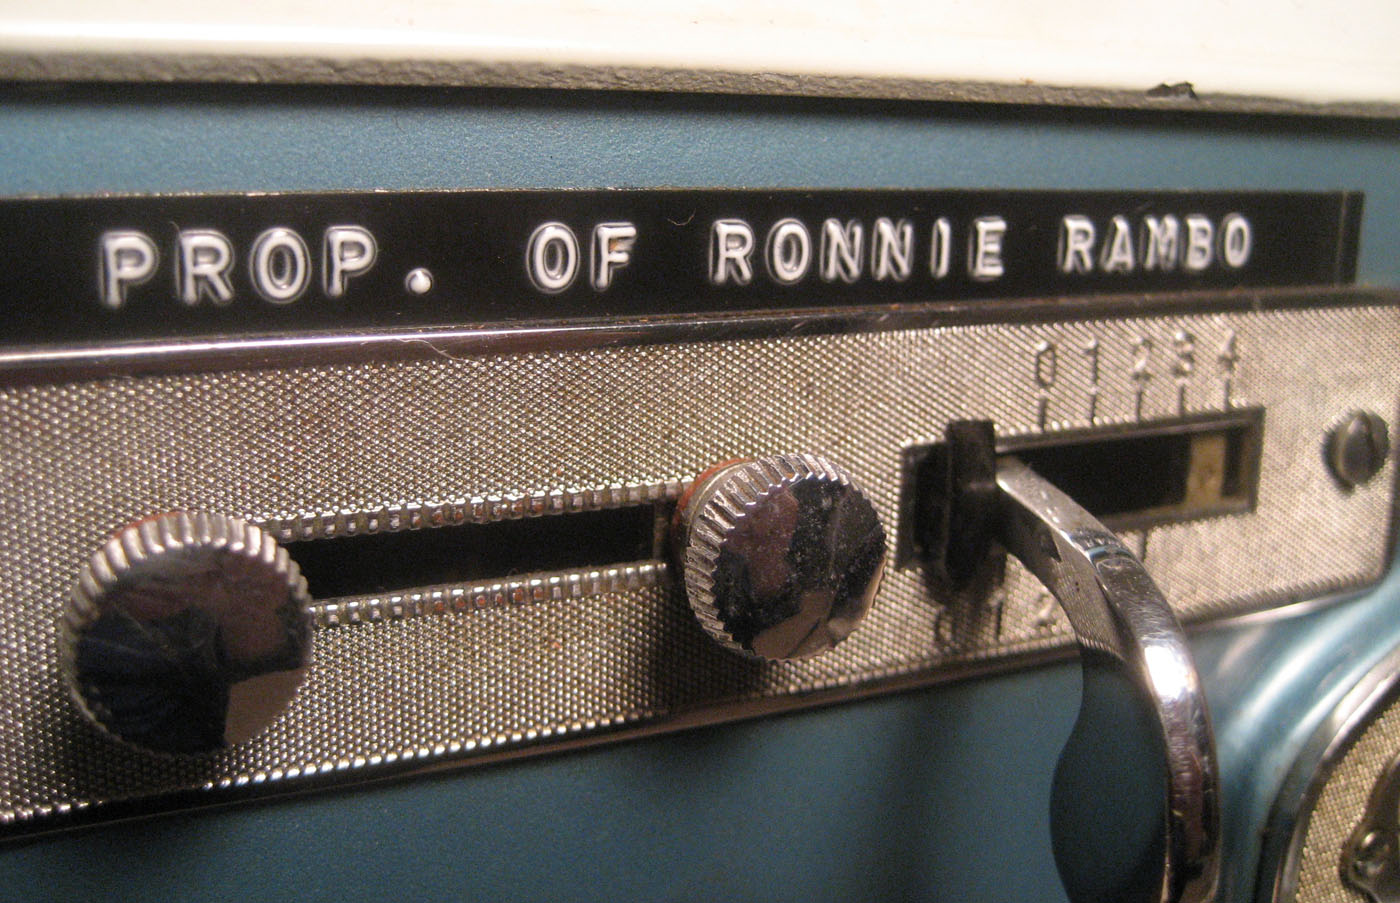 "Property of Ronnie Rambo" sticker